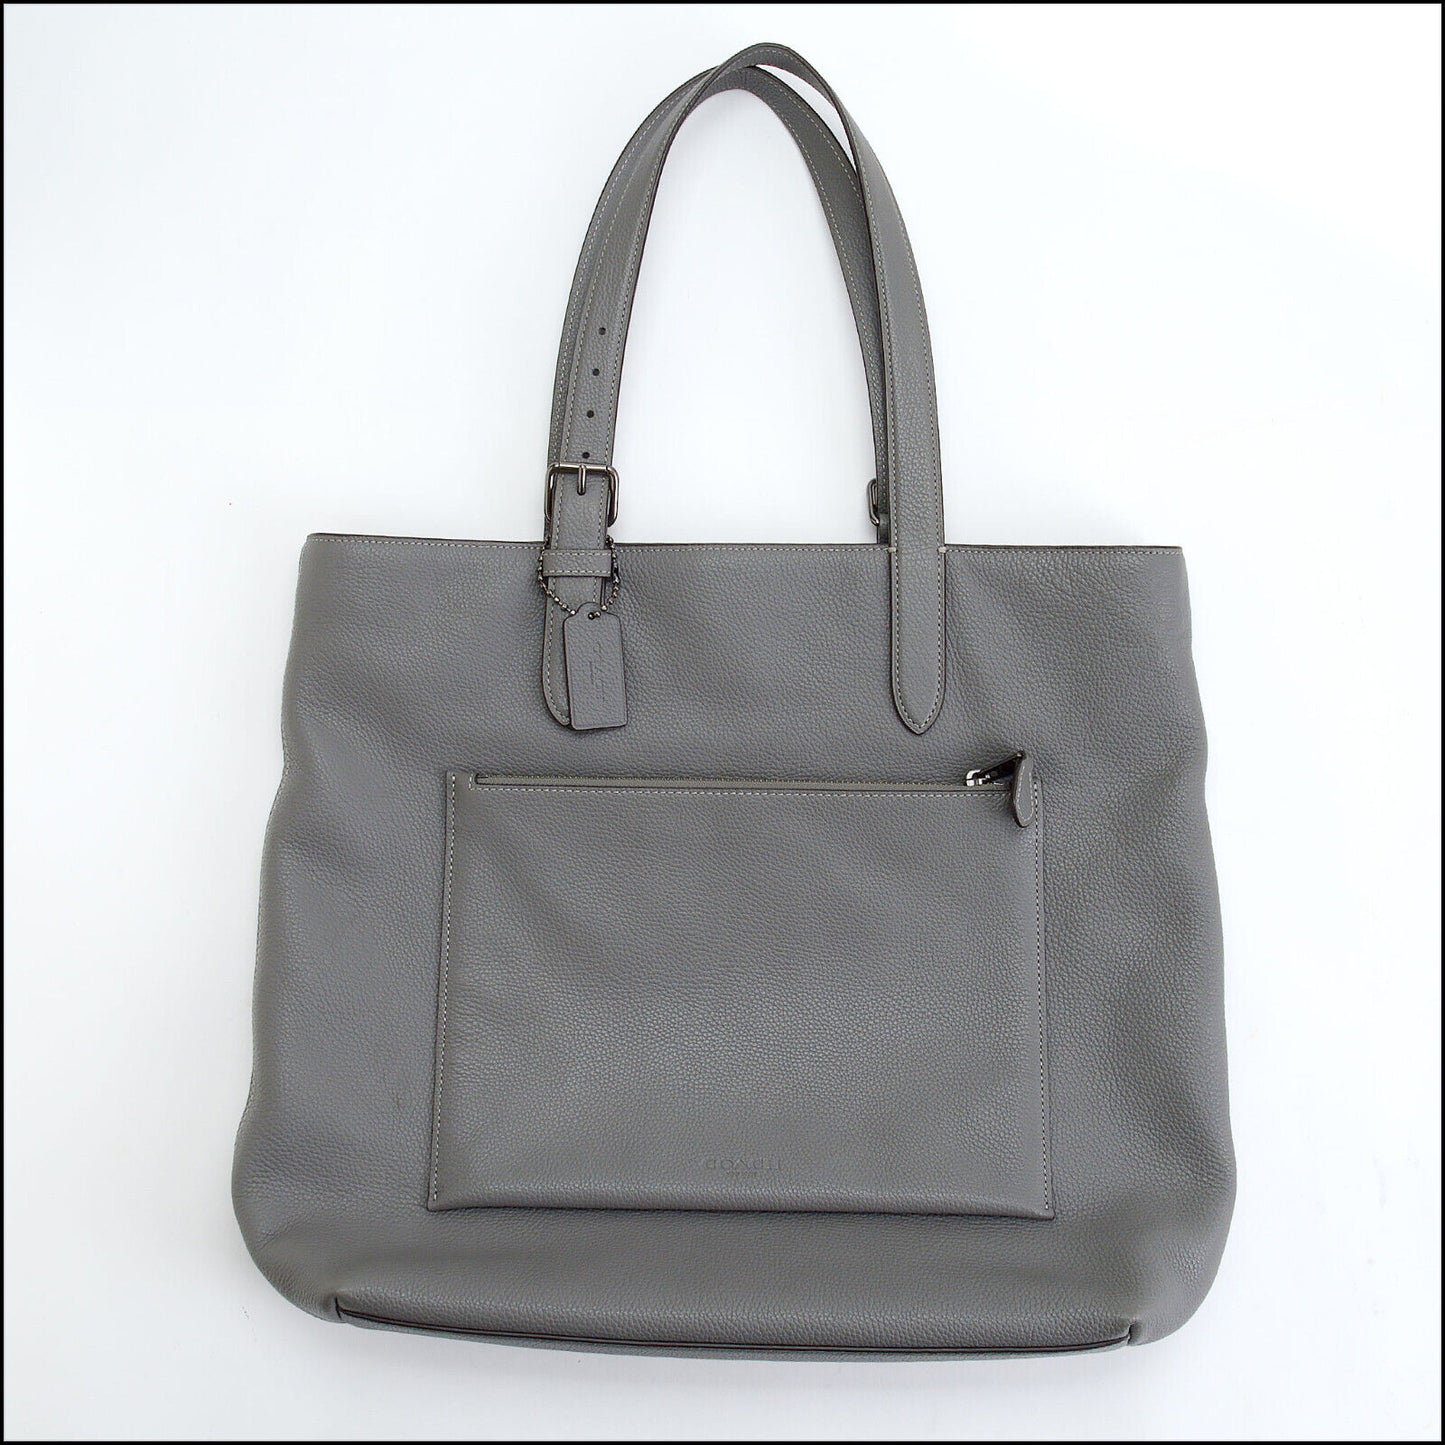 RDC13635 Authentic COACH Grey Large Pebbled Leather Metropolitan Soft Tote Bag